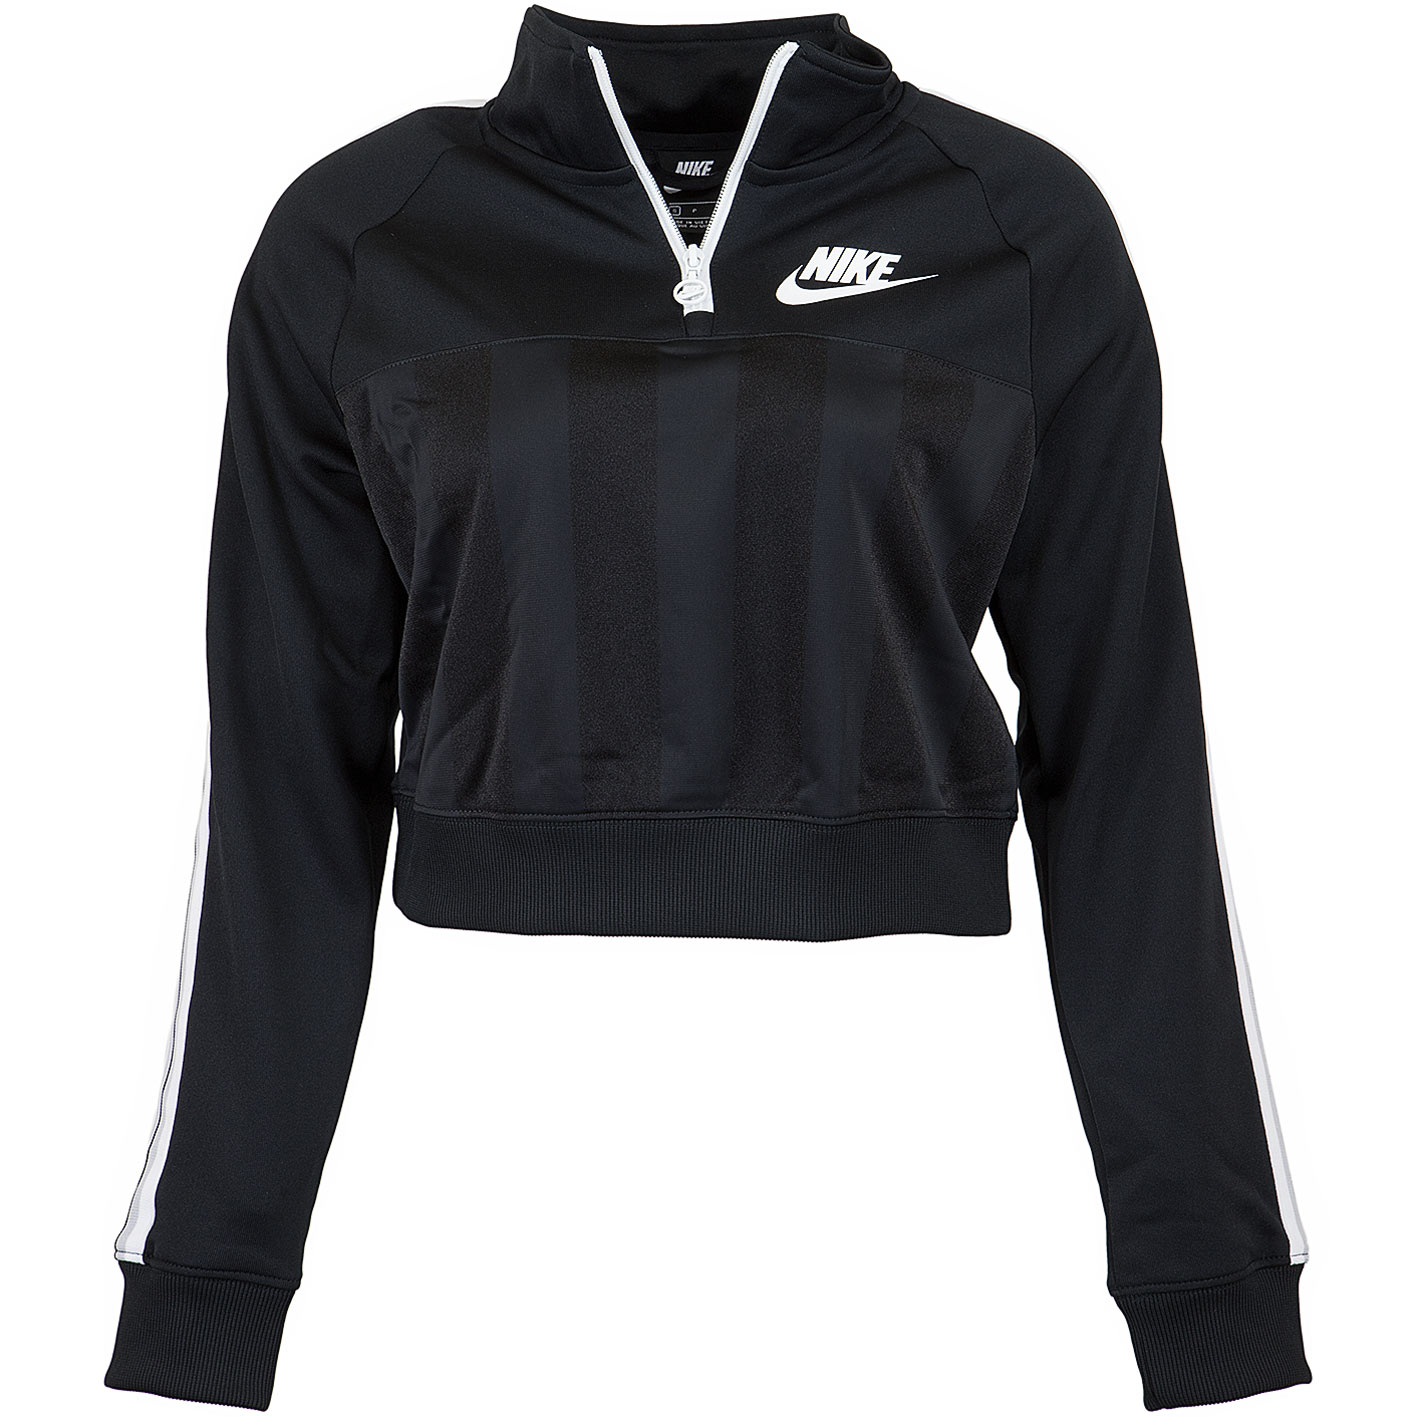 ☆ Nike Damen Trainingsjacke Shadow HZ schwarz/weiß - hier bestellen!